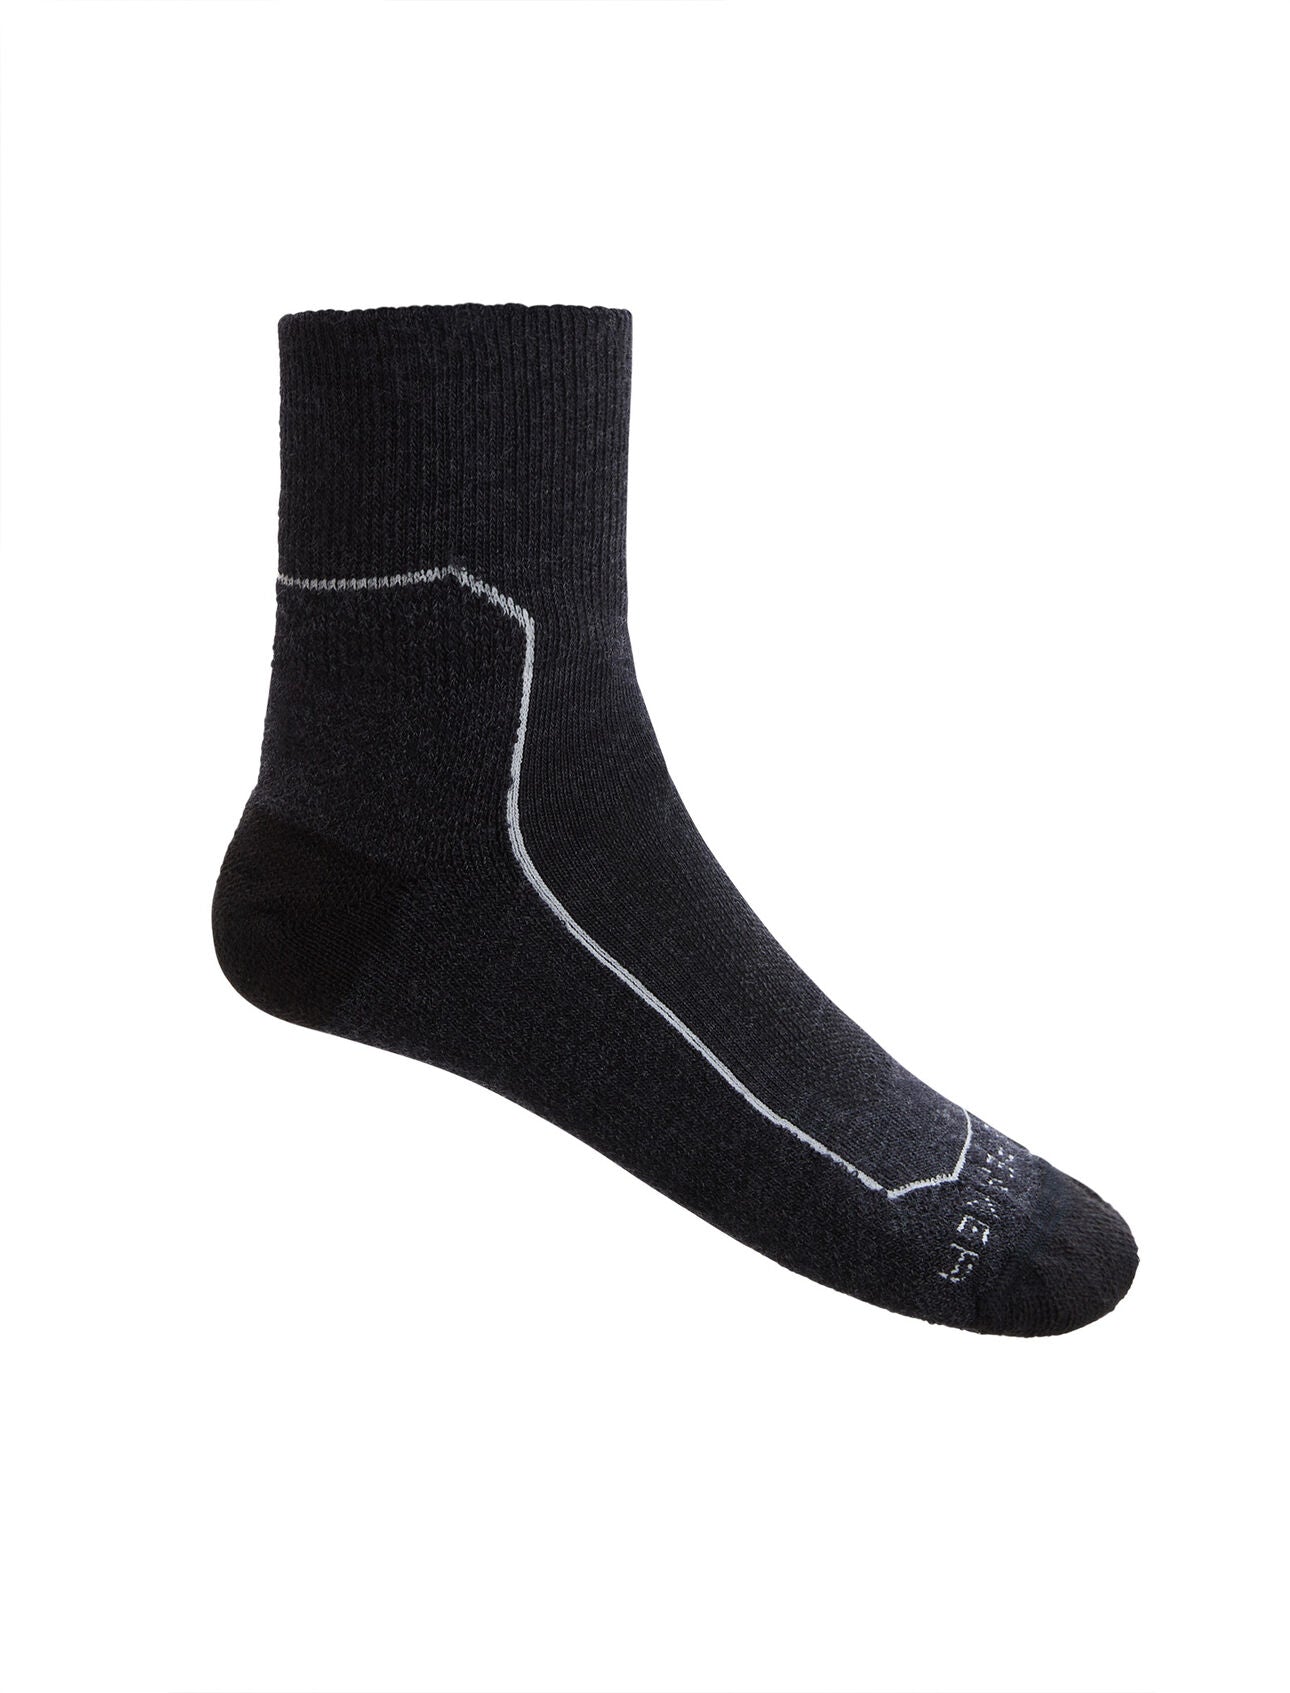 M Merino Hike + Light Mini Socks